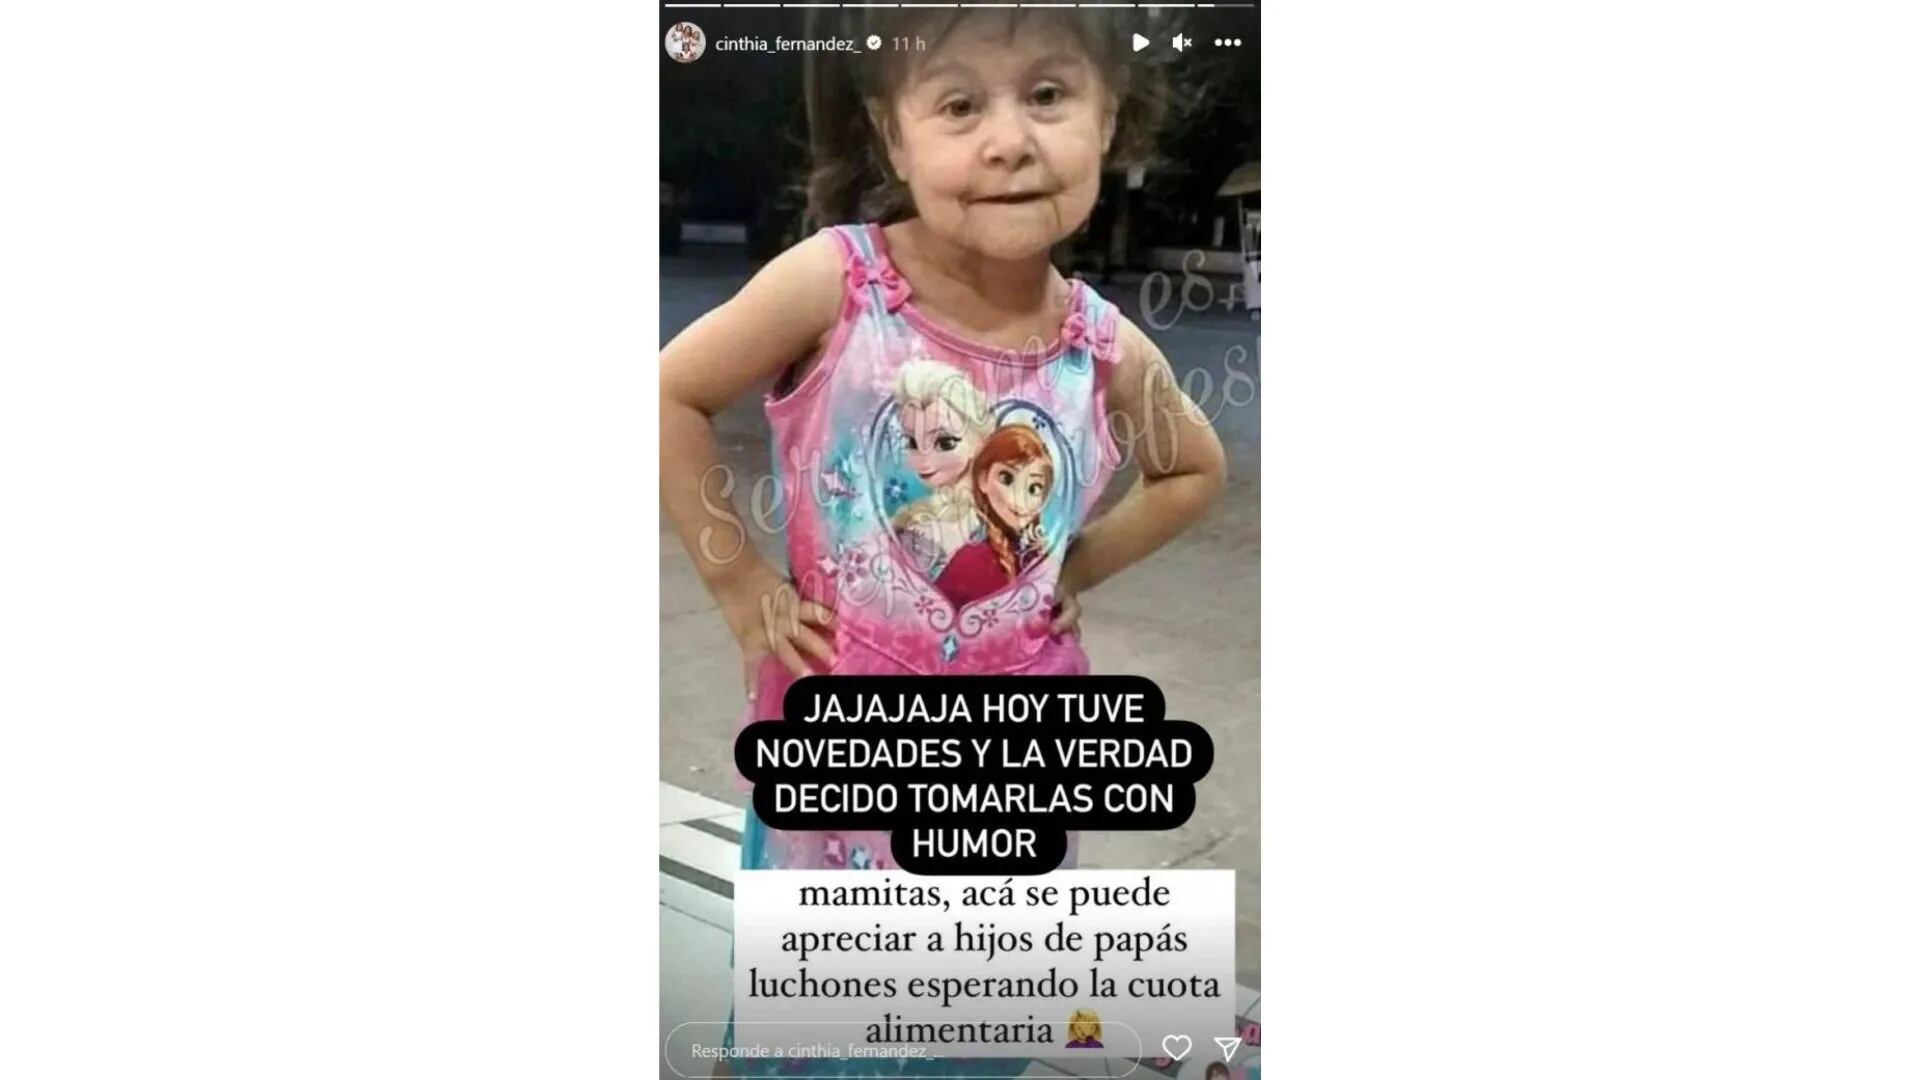 La feroz meme de Cinthia Fernández contra Matías Defederico por la cuota alimentaria de sus hijas: “Esperando”